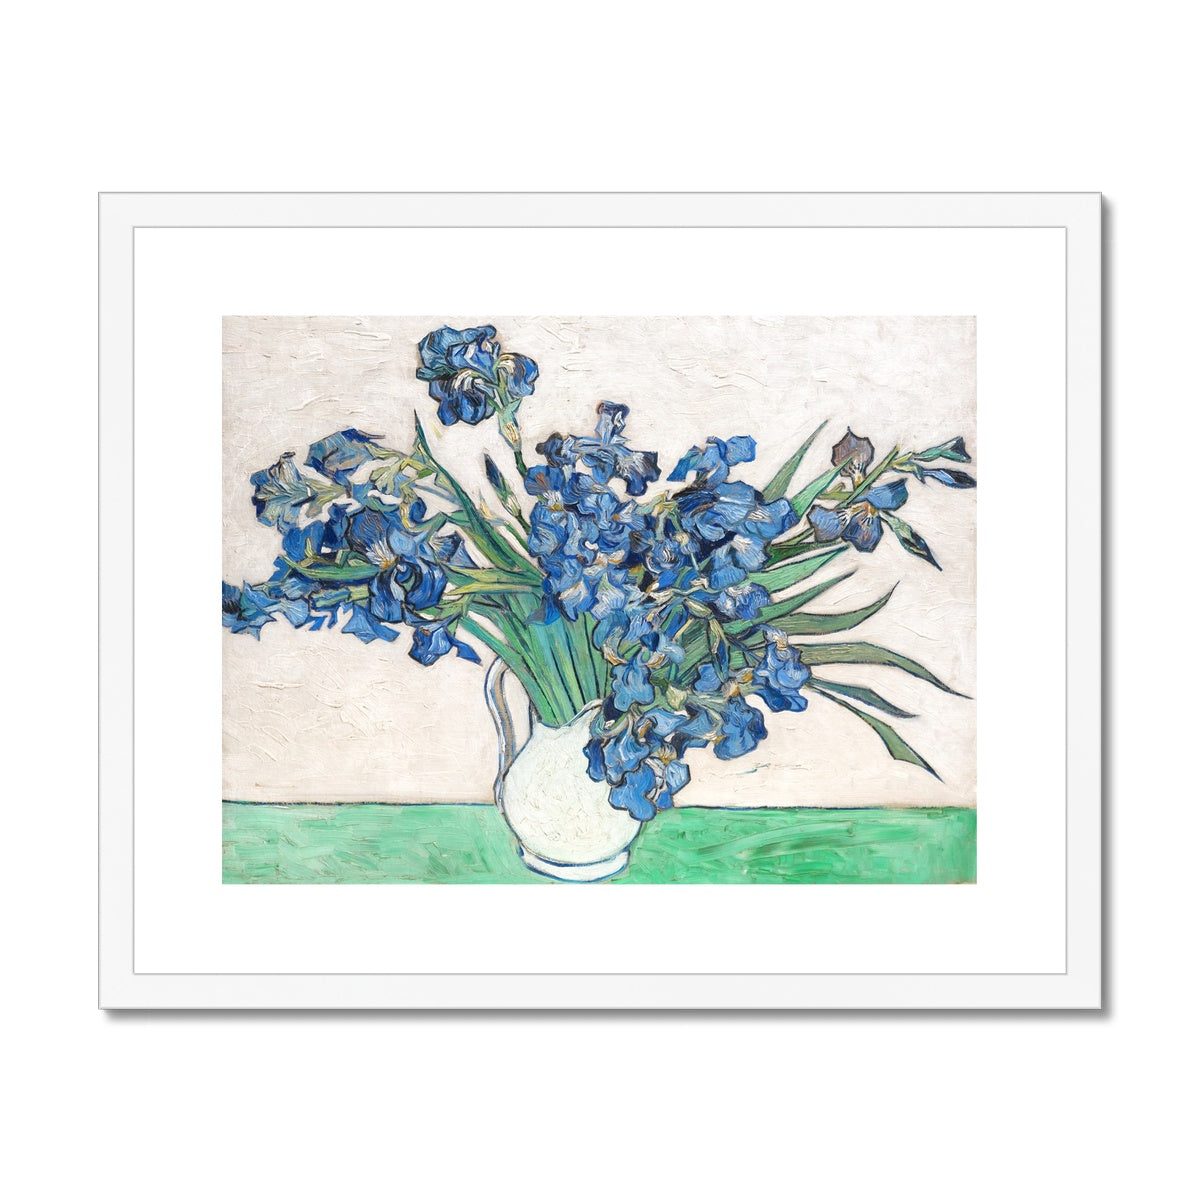 Vincent Van Gogh Framed Open Edition Art Print. 'Irises' Still-Life. Art Gallery Historic Art